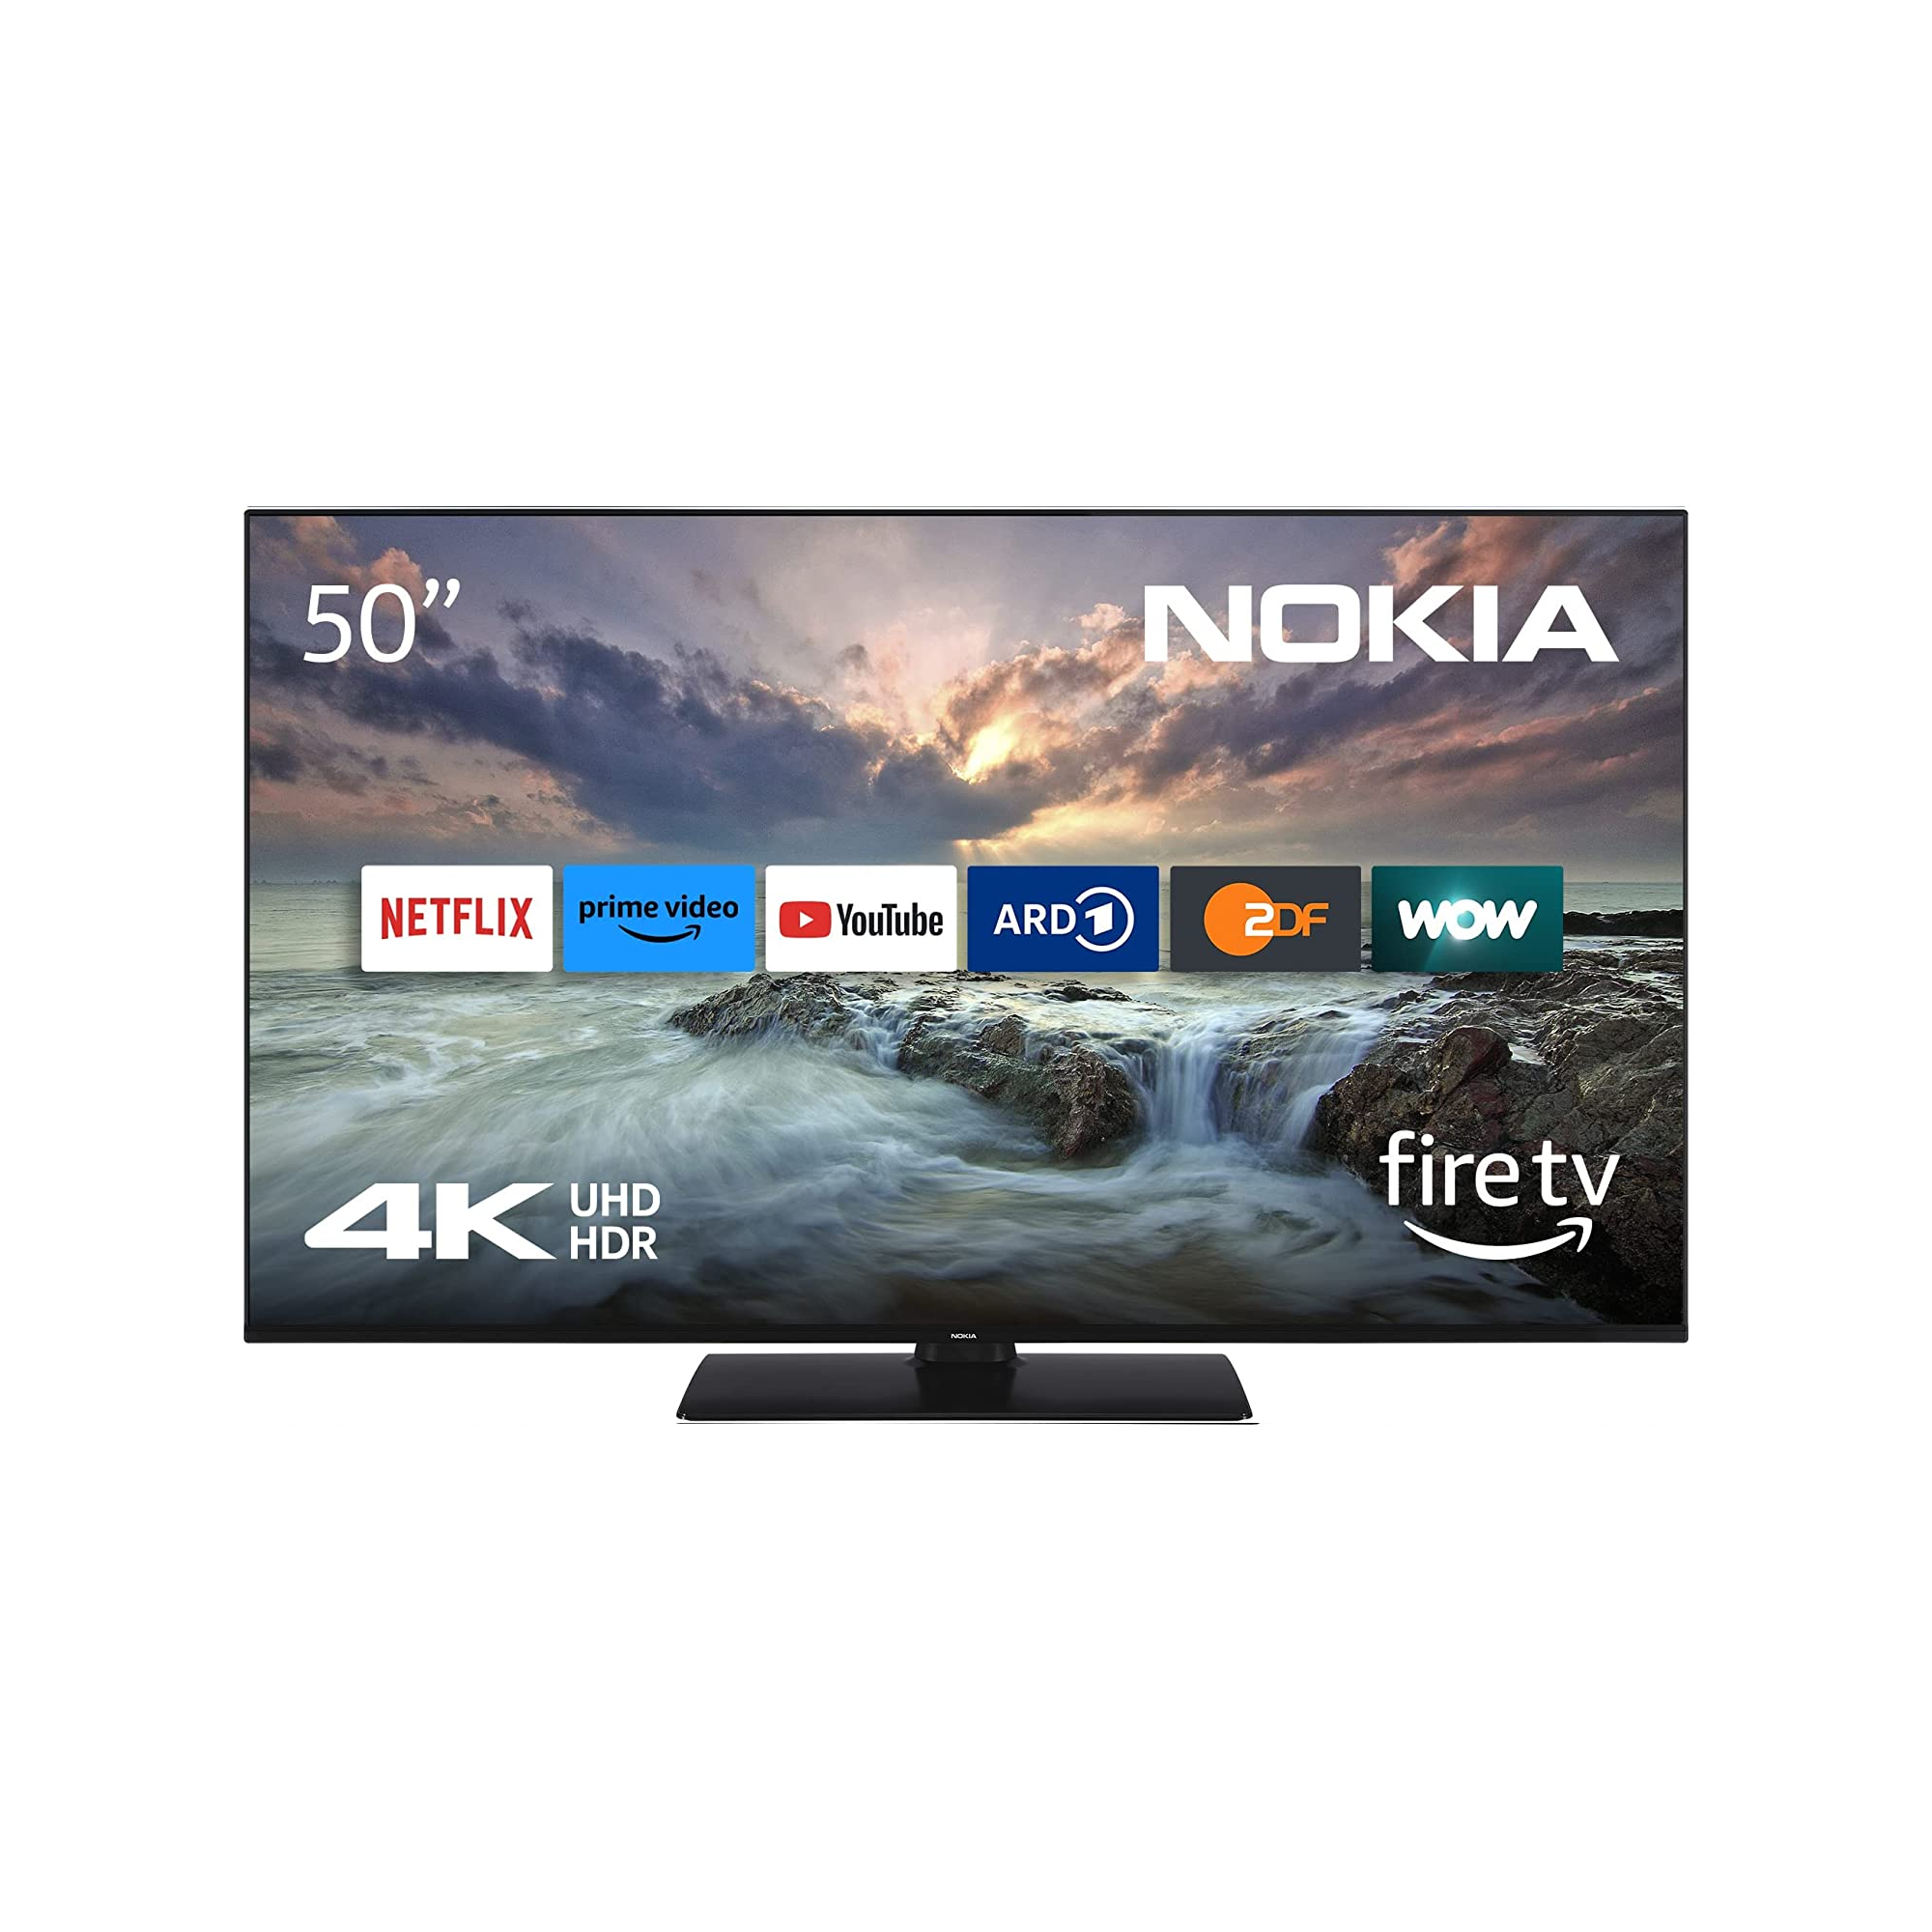 50 Zoll / 126 cm 4K UHD Smart TV mit Fire TV [NOKIA]